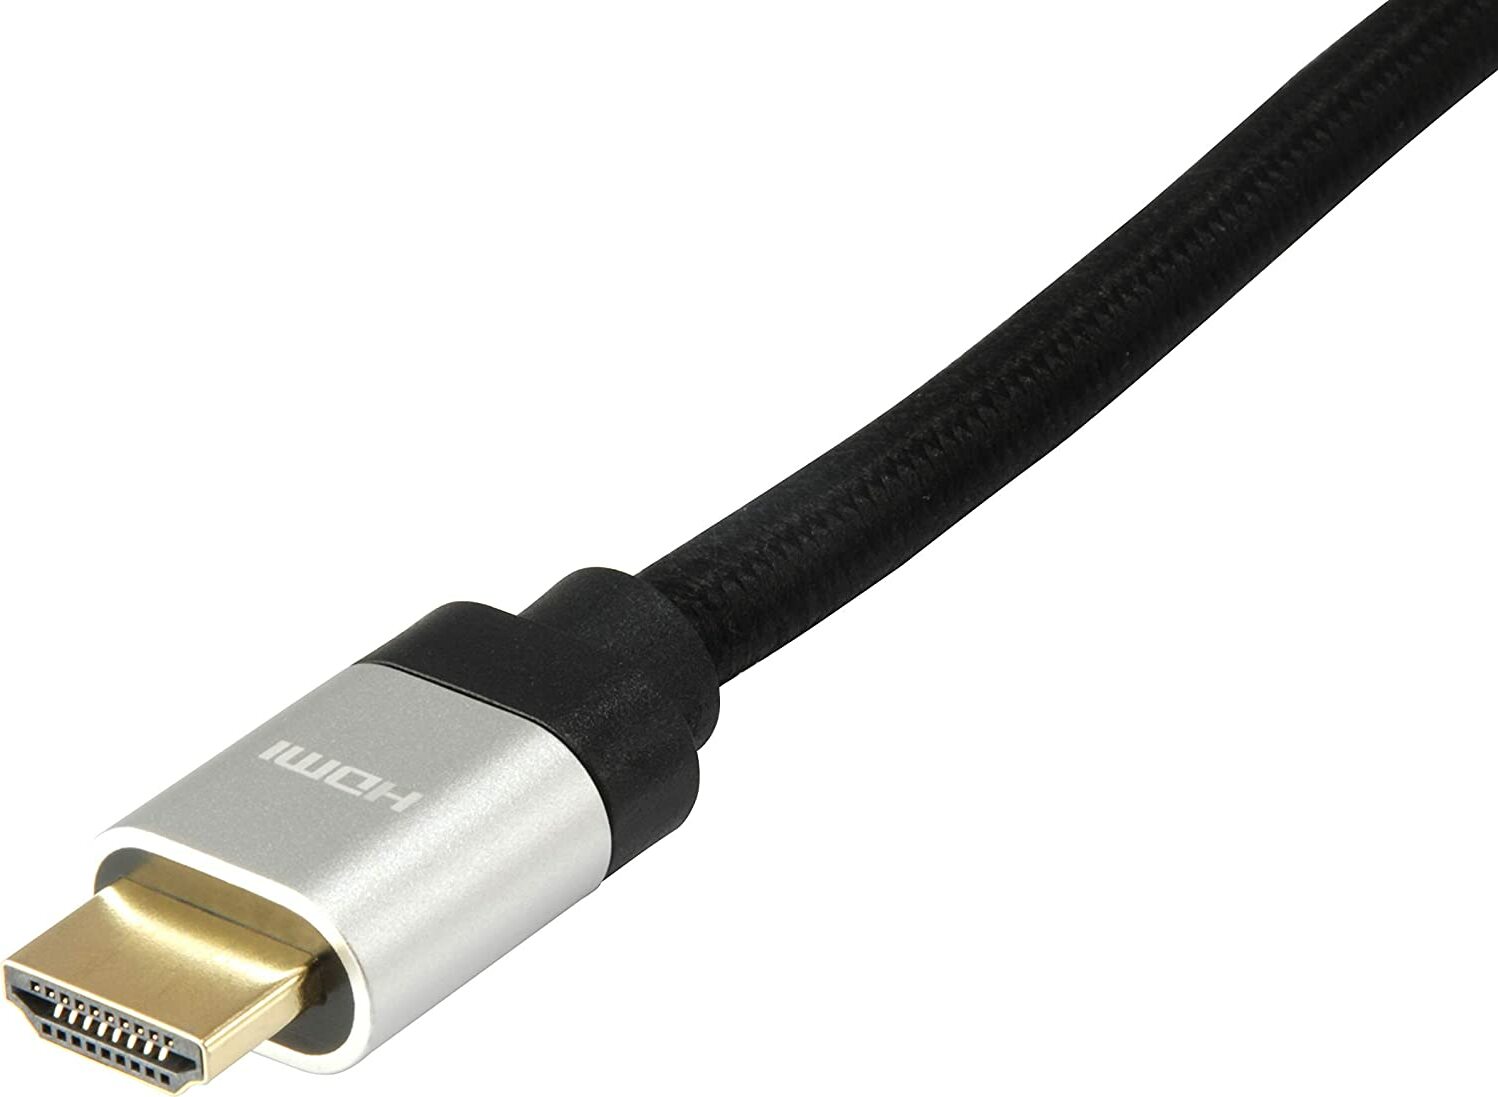 equip Highspeed HDMI-Kabel mit Ethernet (119381)